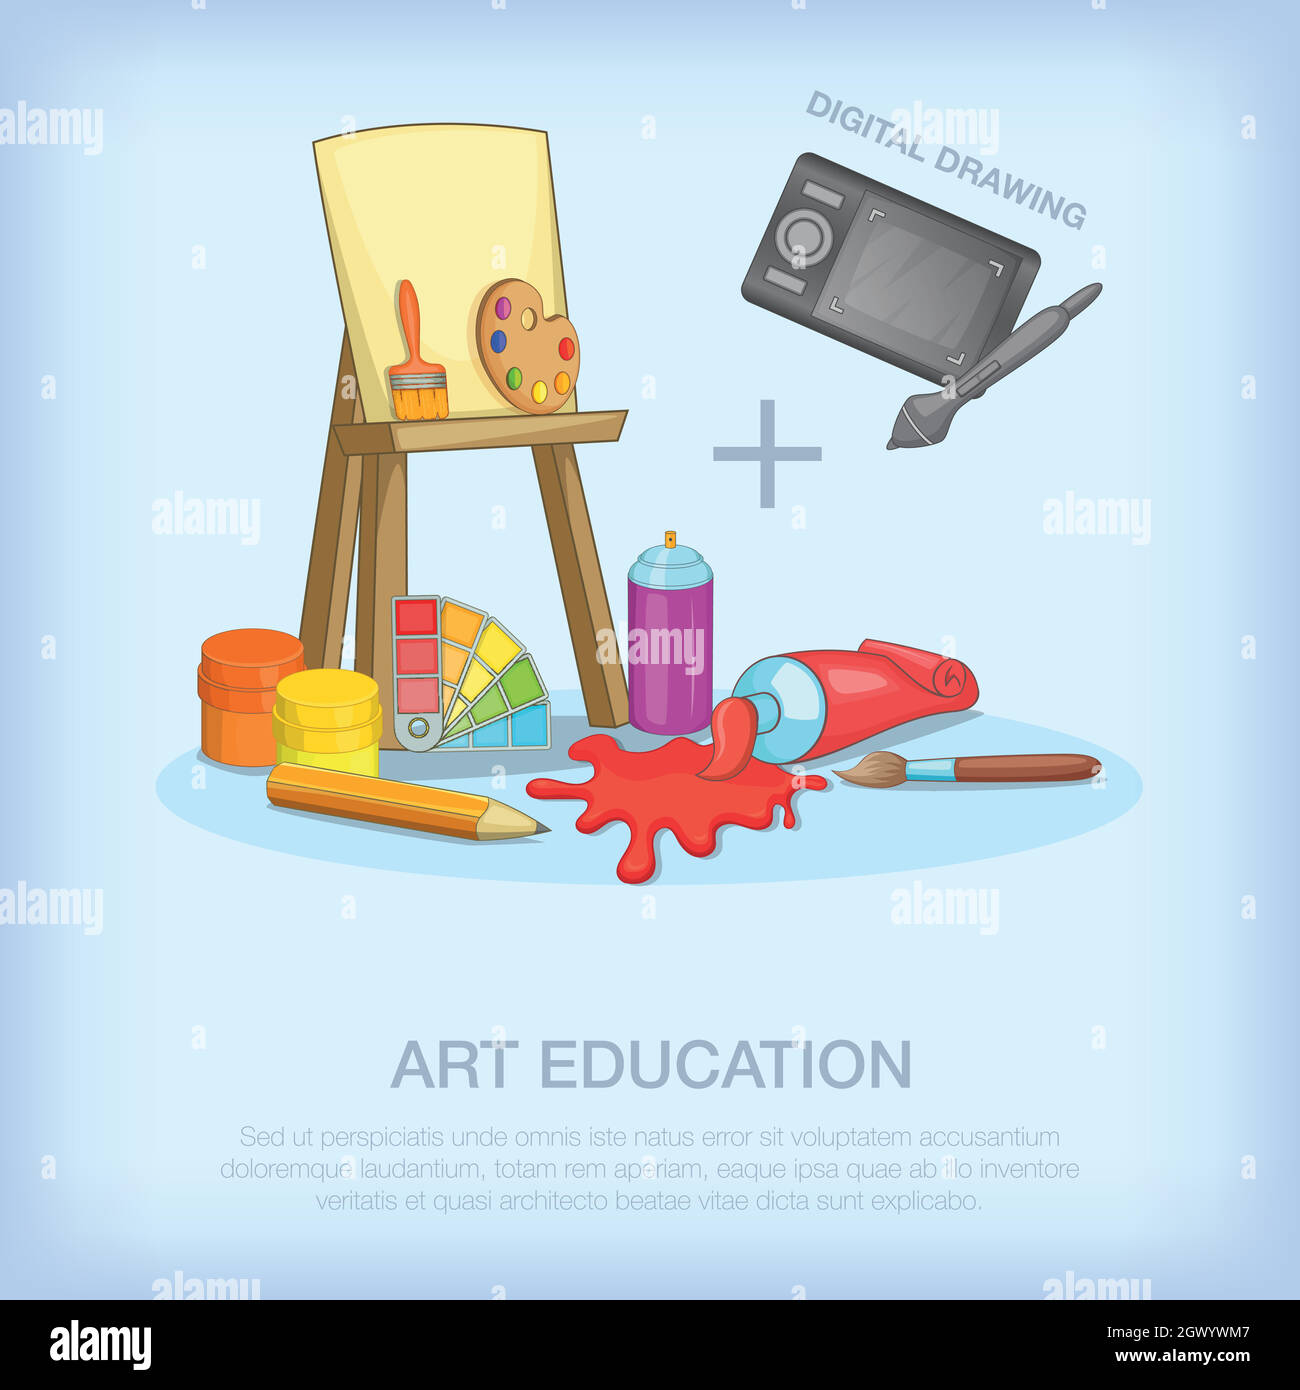 Art education tools concept, cartoon style Stock Vector